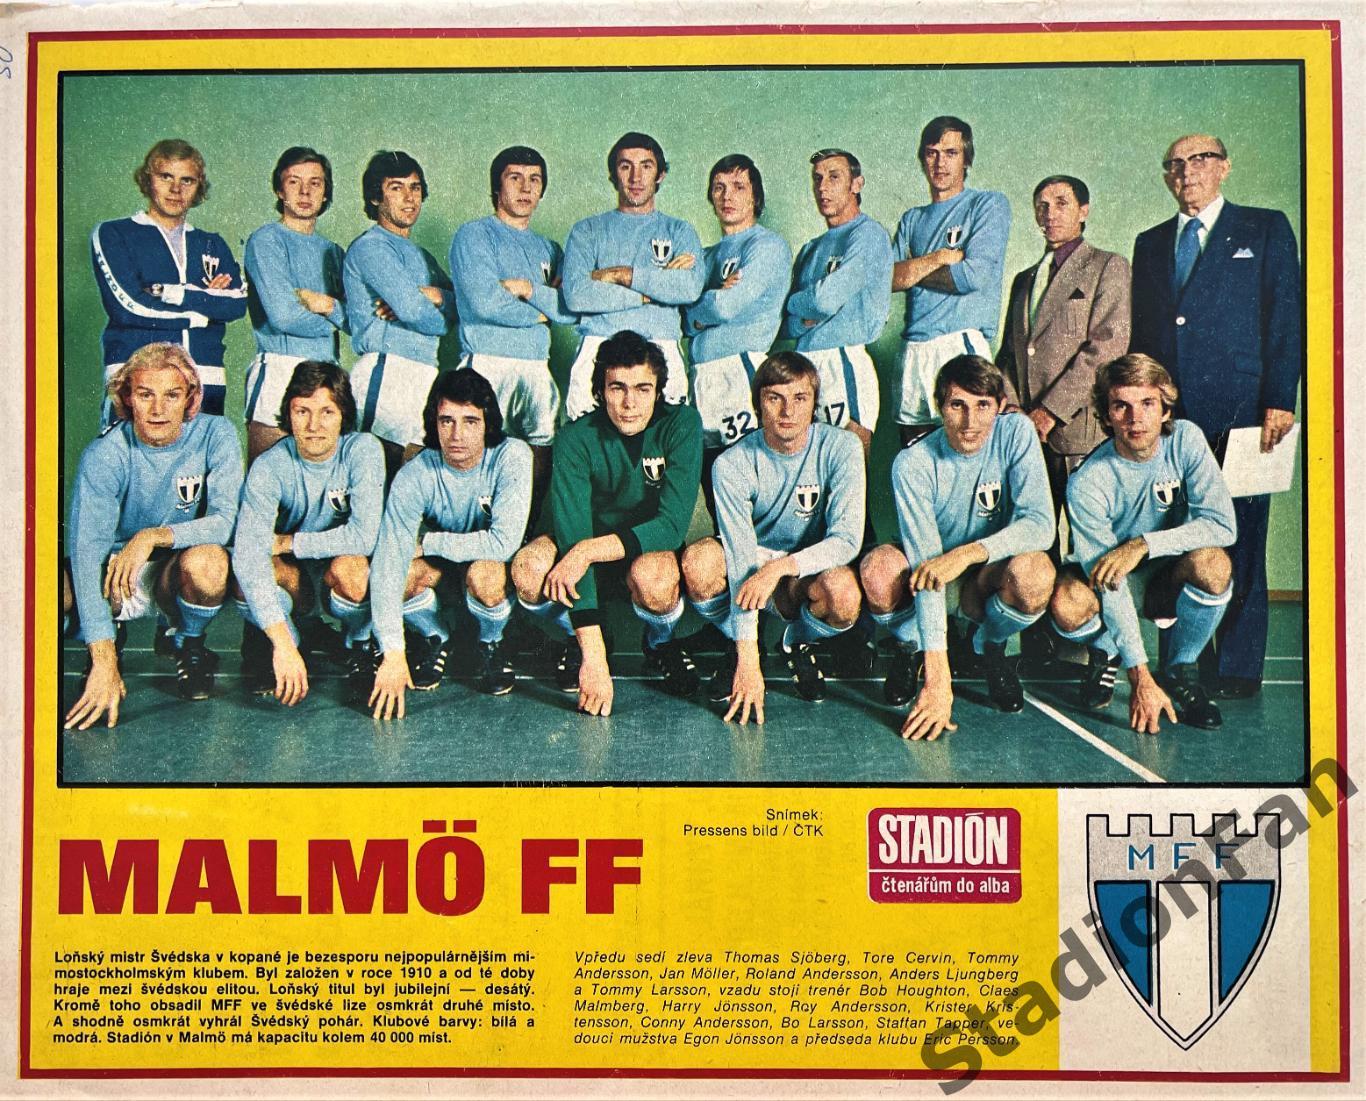 Постер из журнала Стадион (Stadion) - Malmo, 1975.